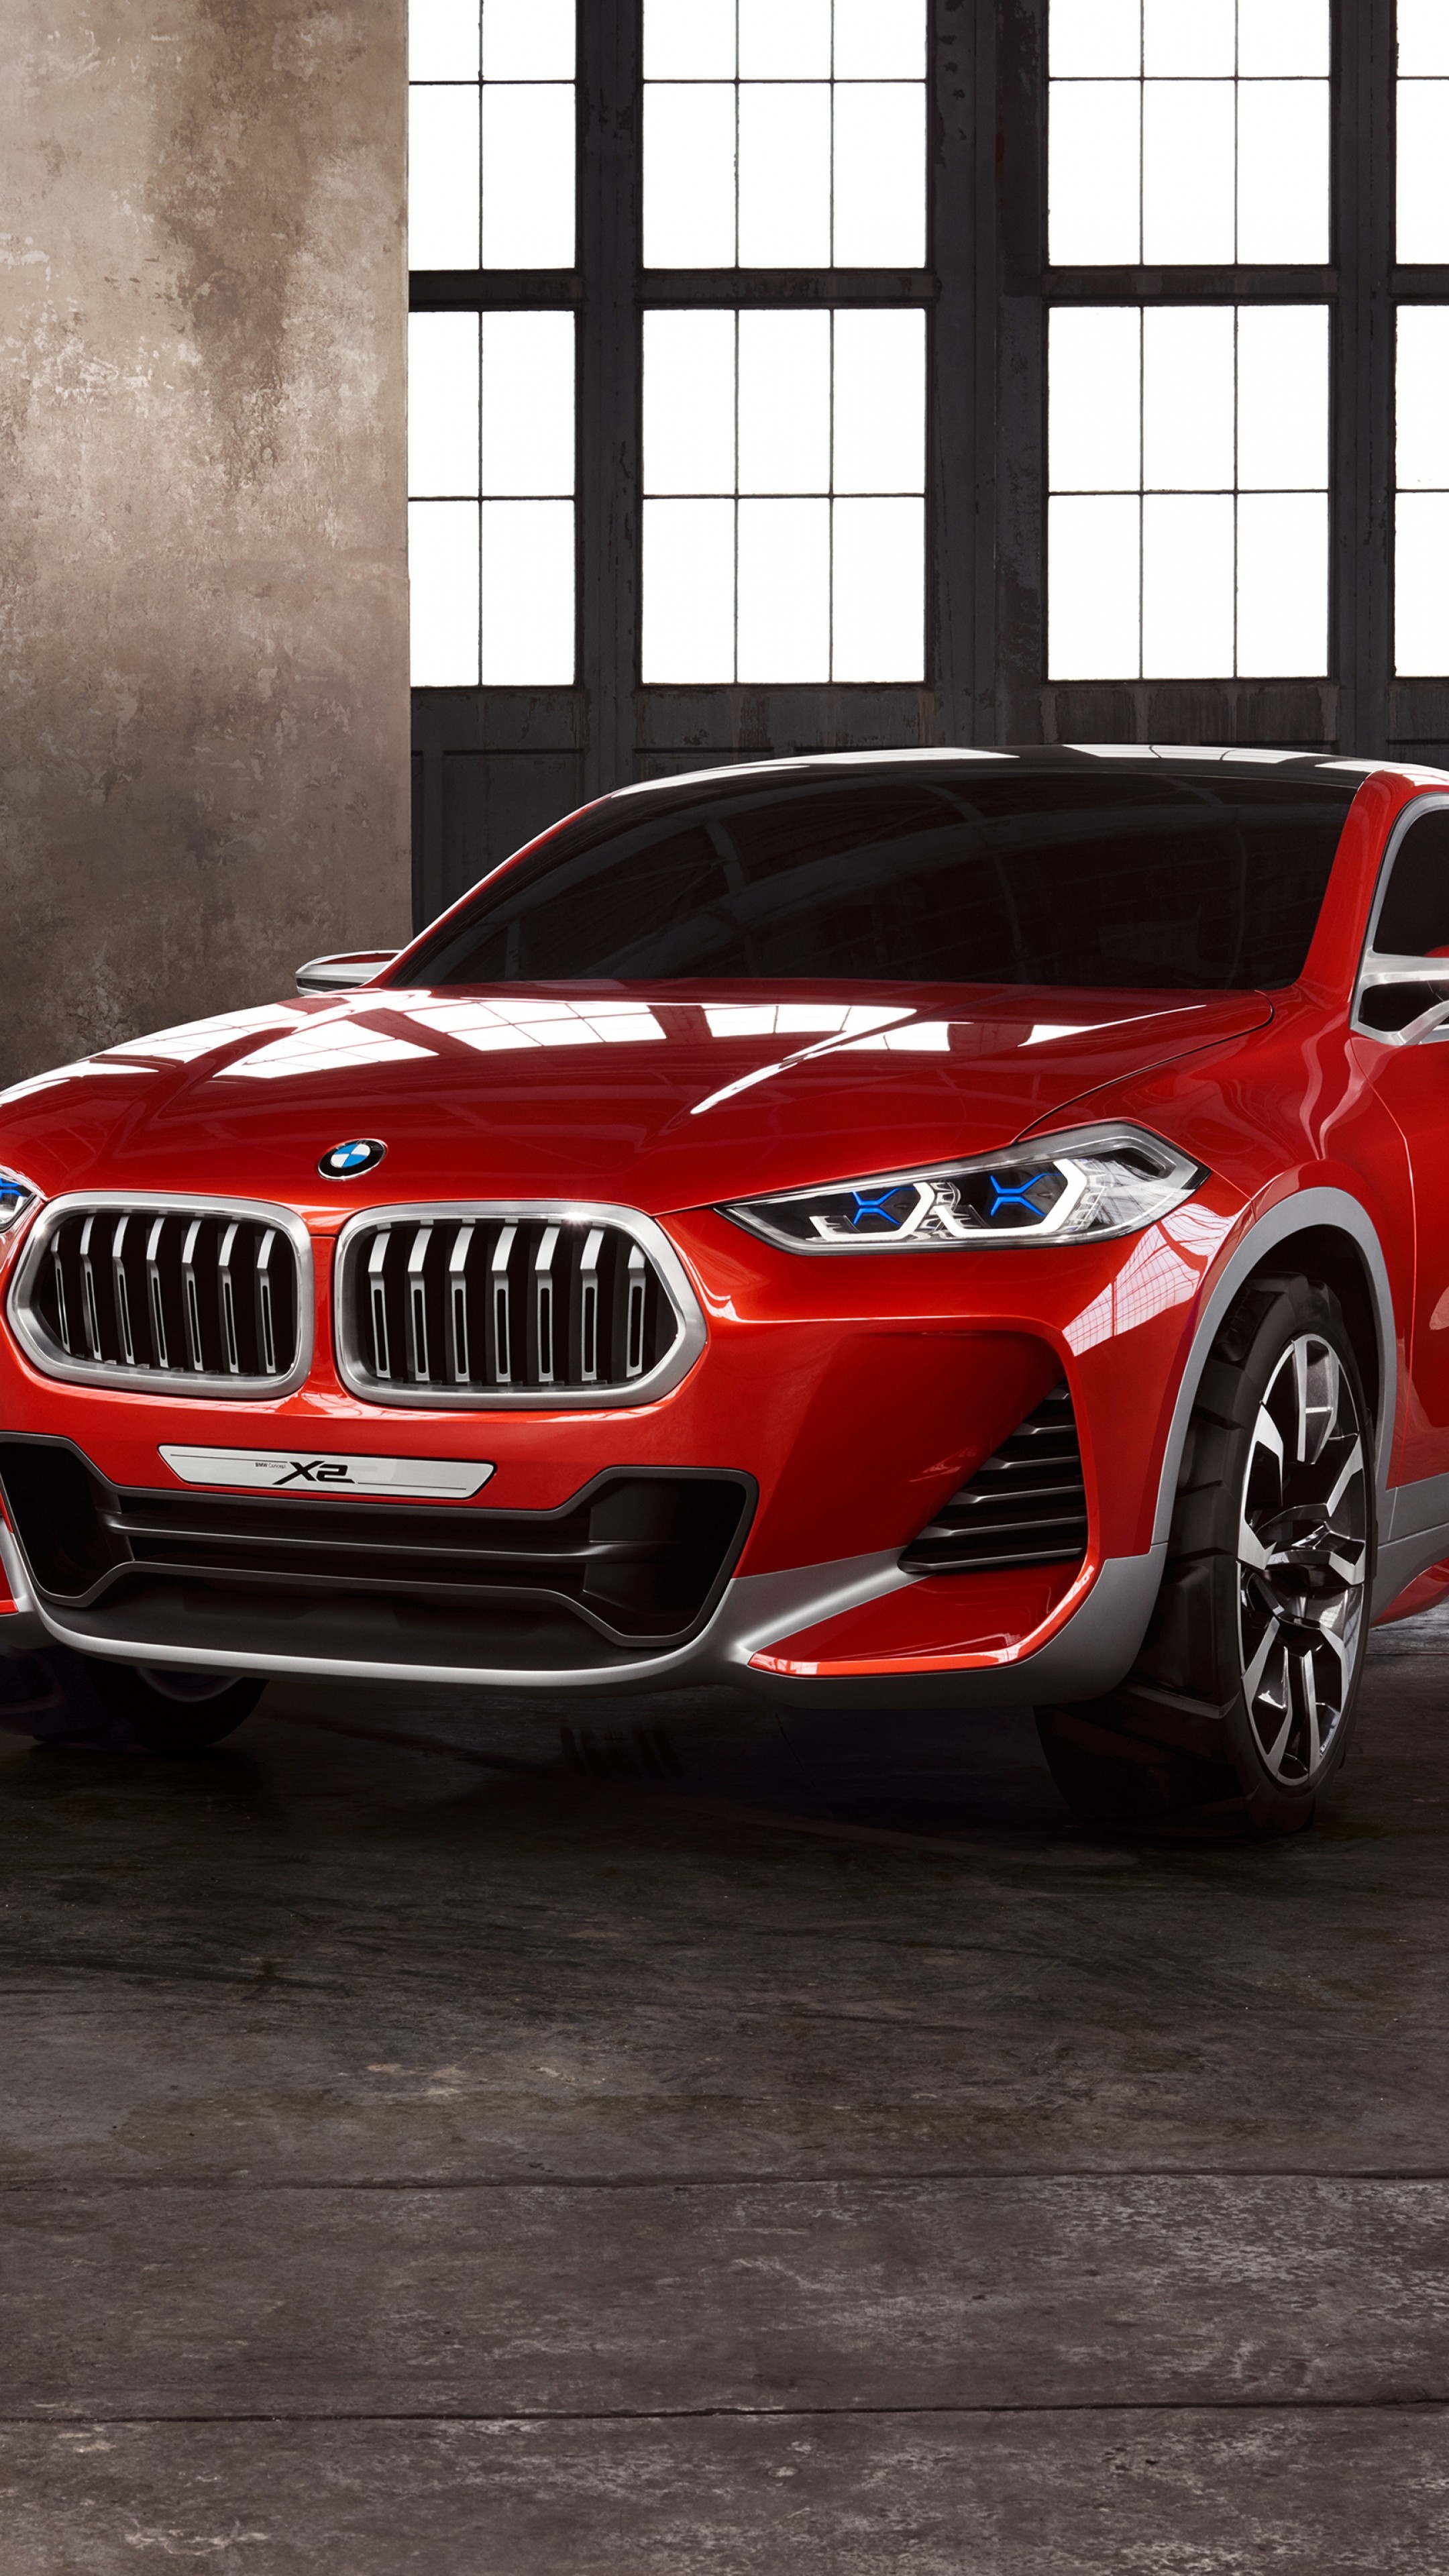 BMW X2, Impressive design, Compact size, High-performance capabilities, 2160x3840 4K Phone